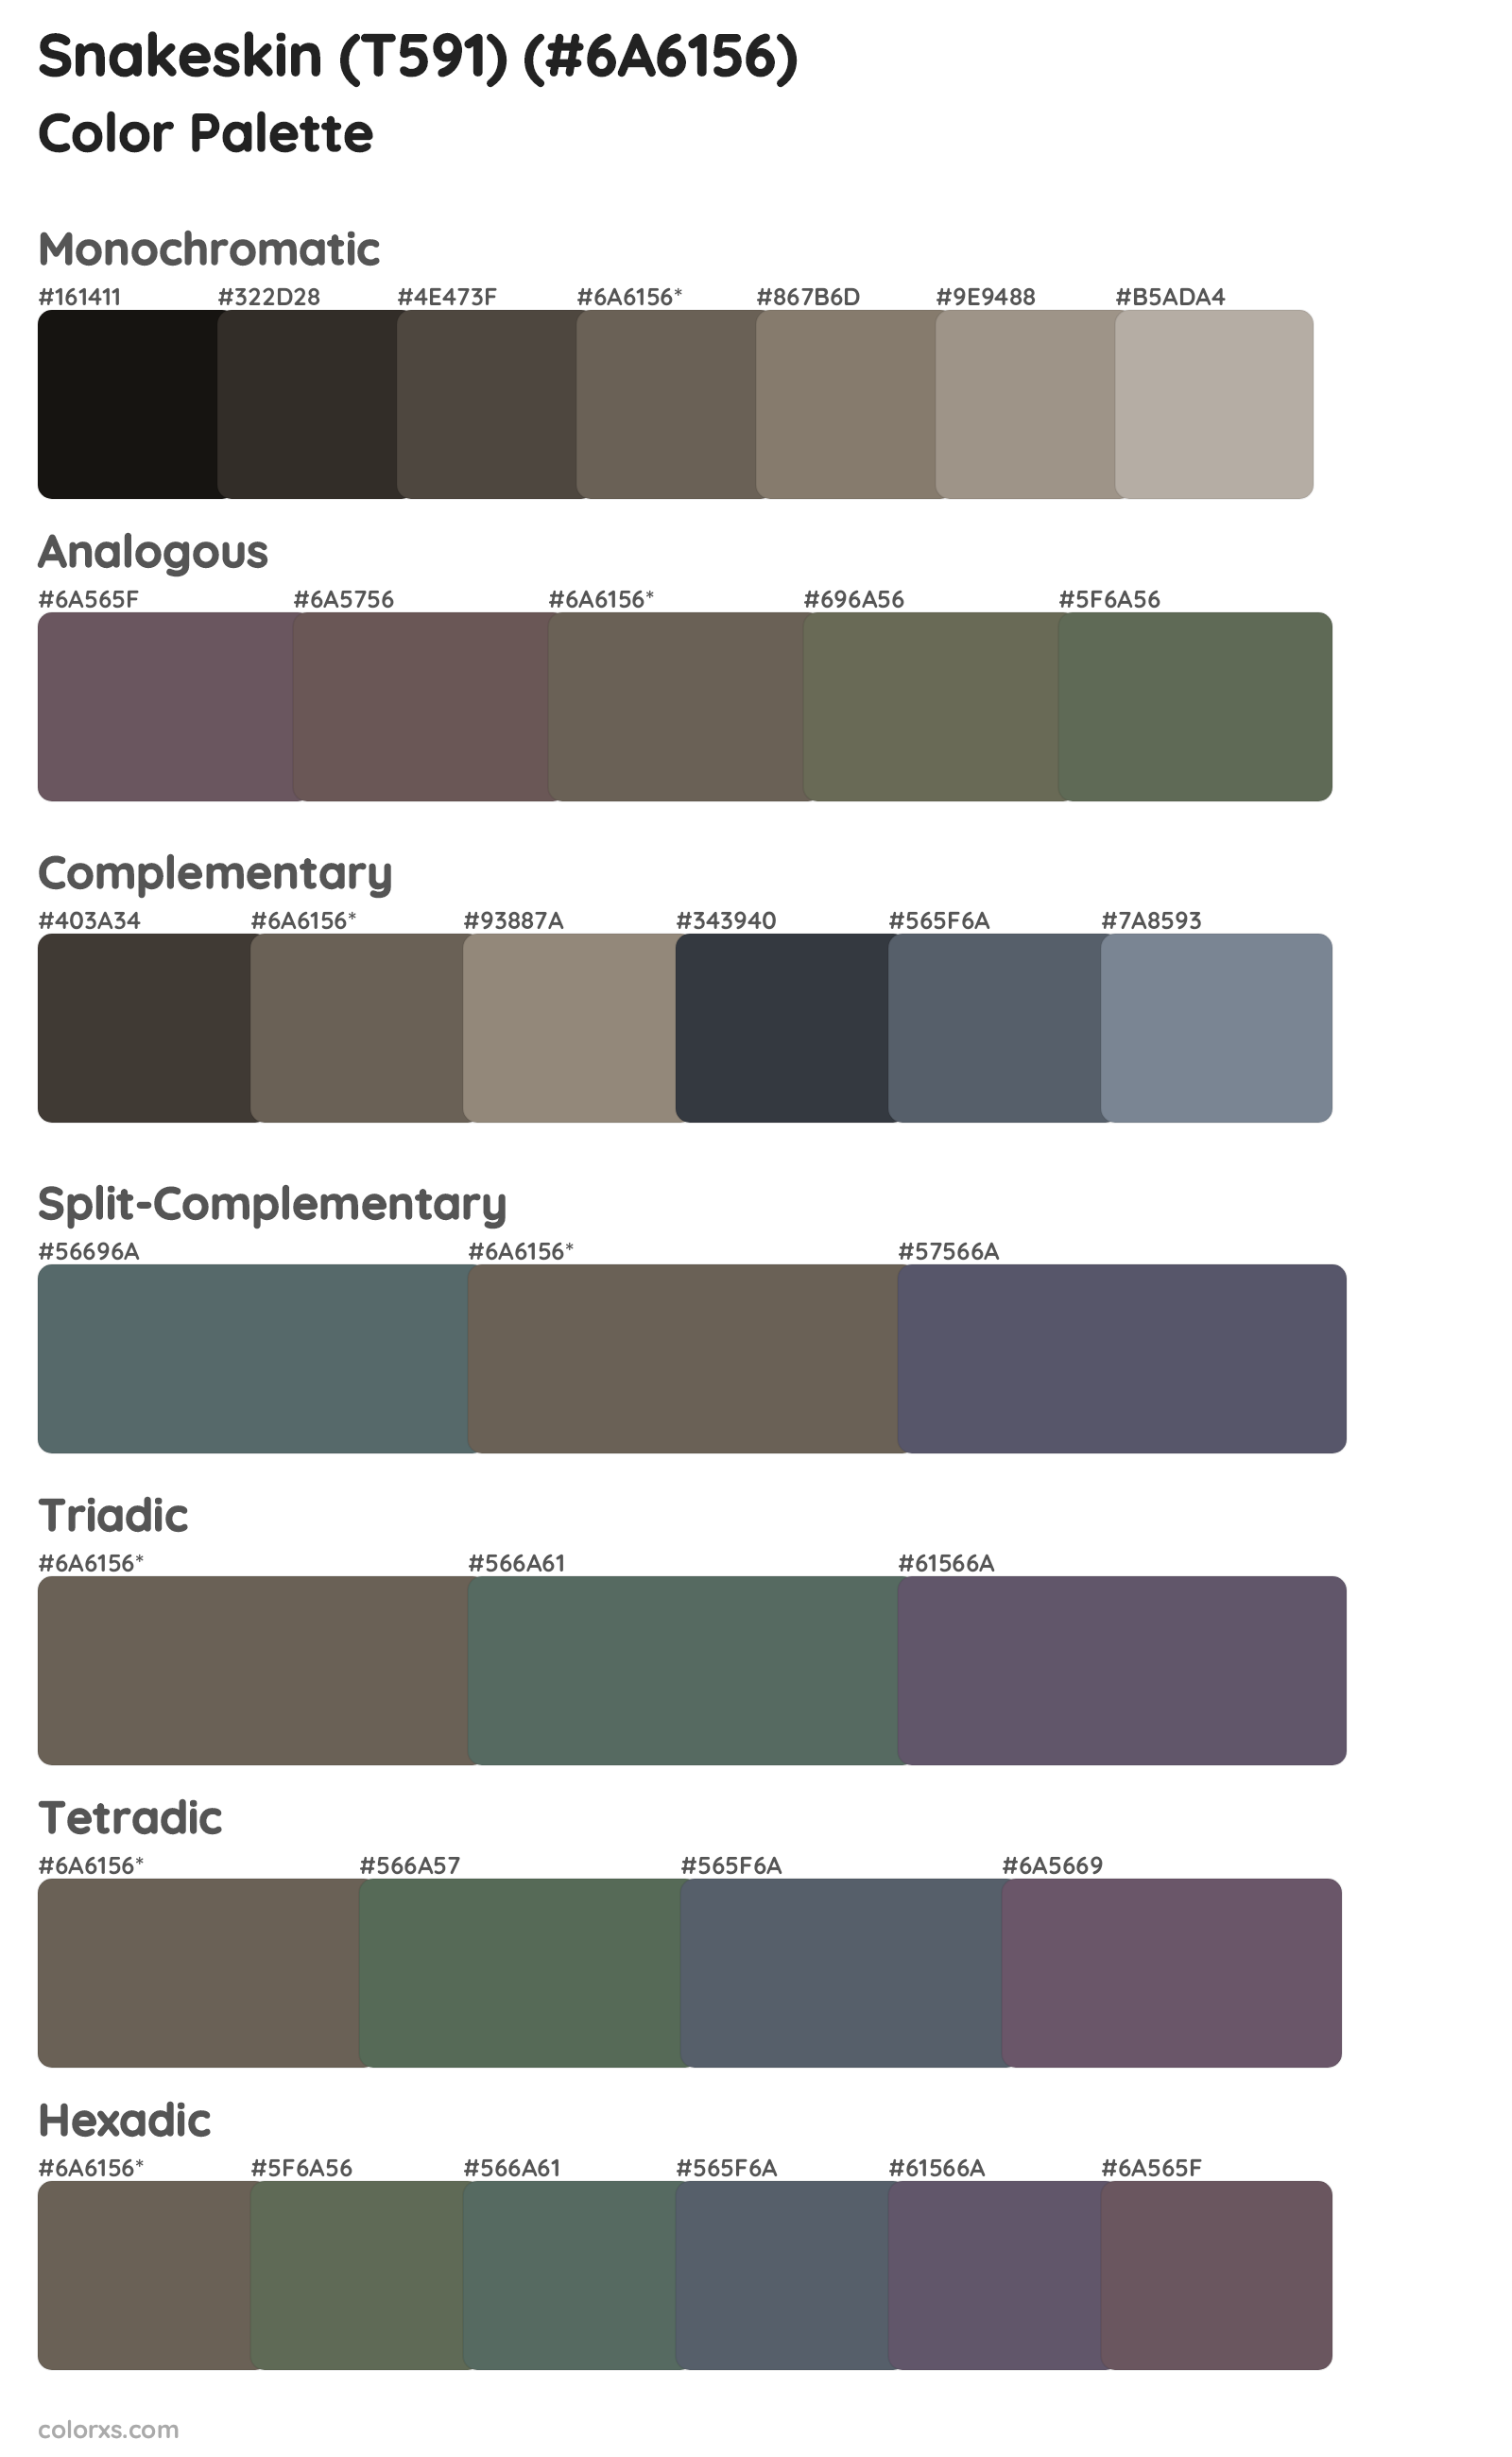 Snakeskin (T591) Color Scheme Palettes